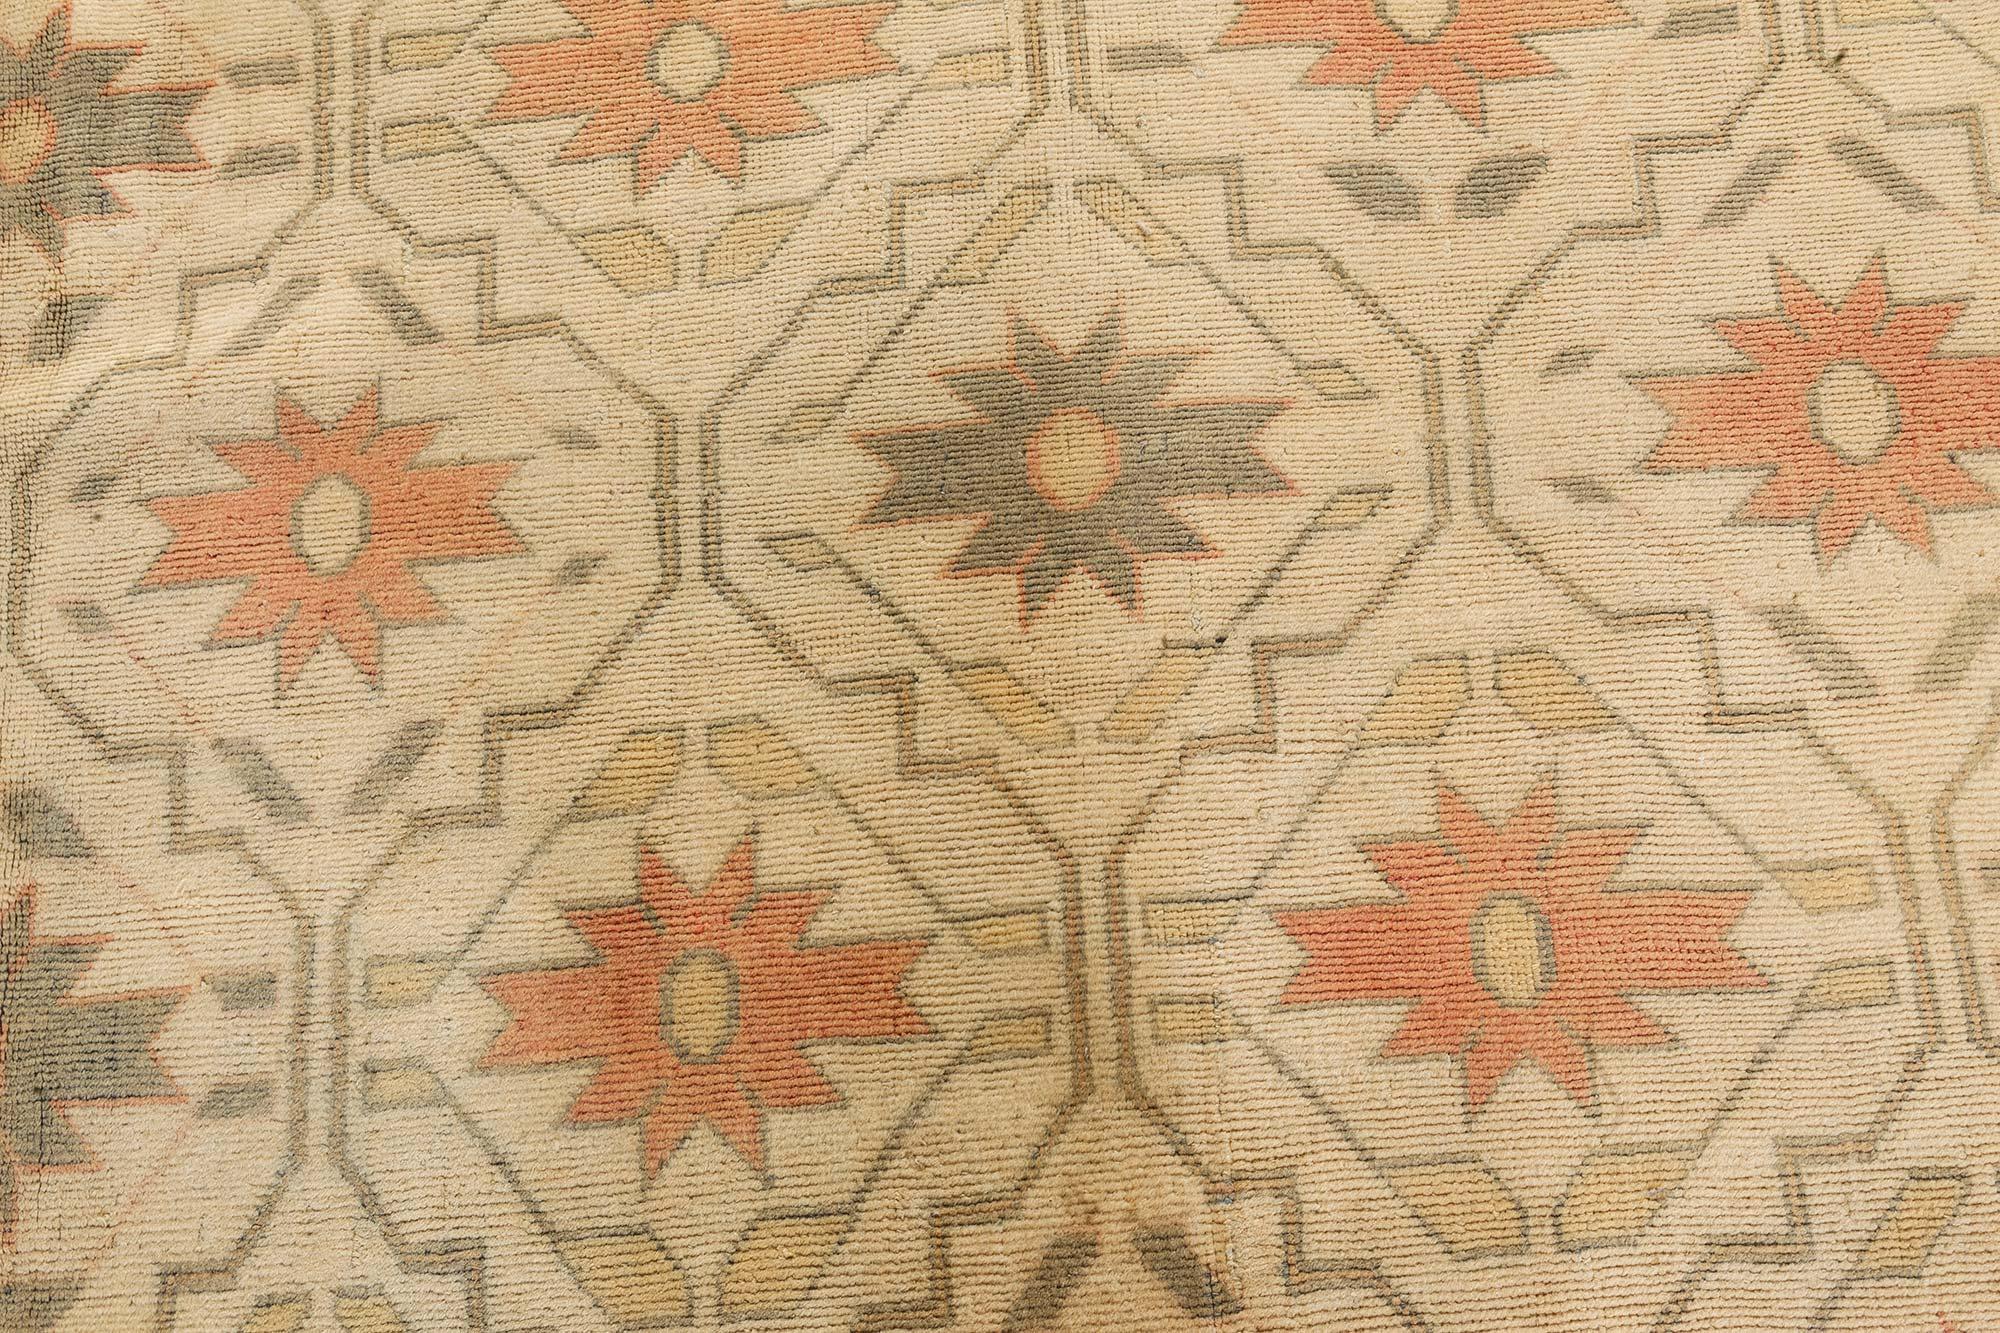 Vintage Bezalel handmade wool rug
Size: 11'2